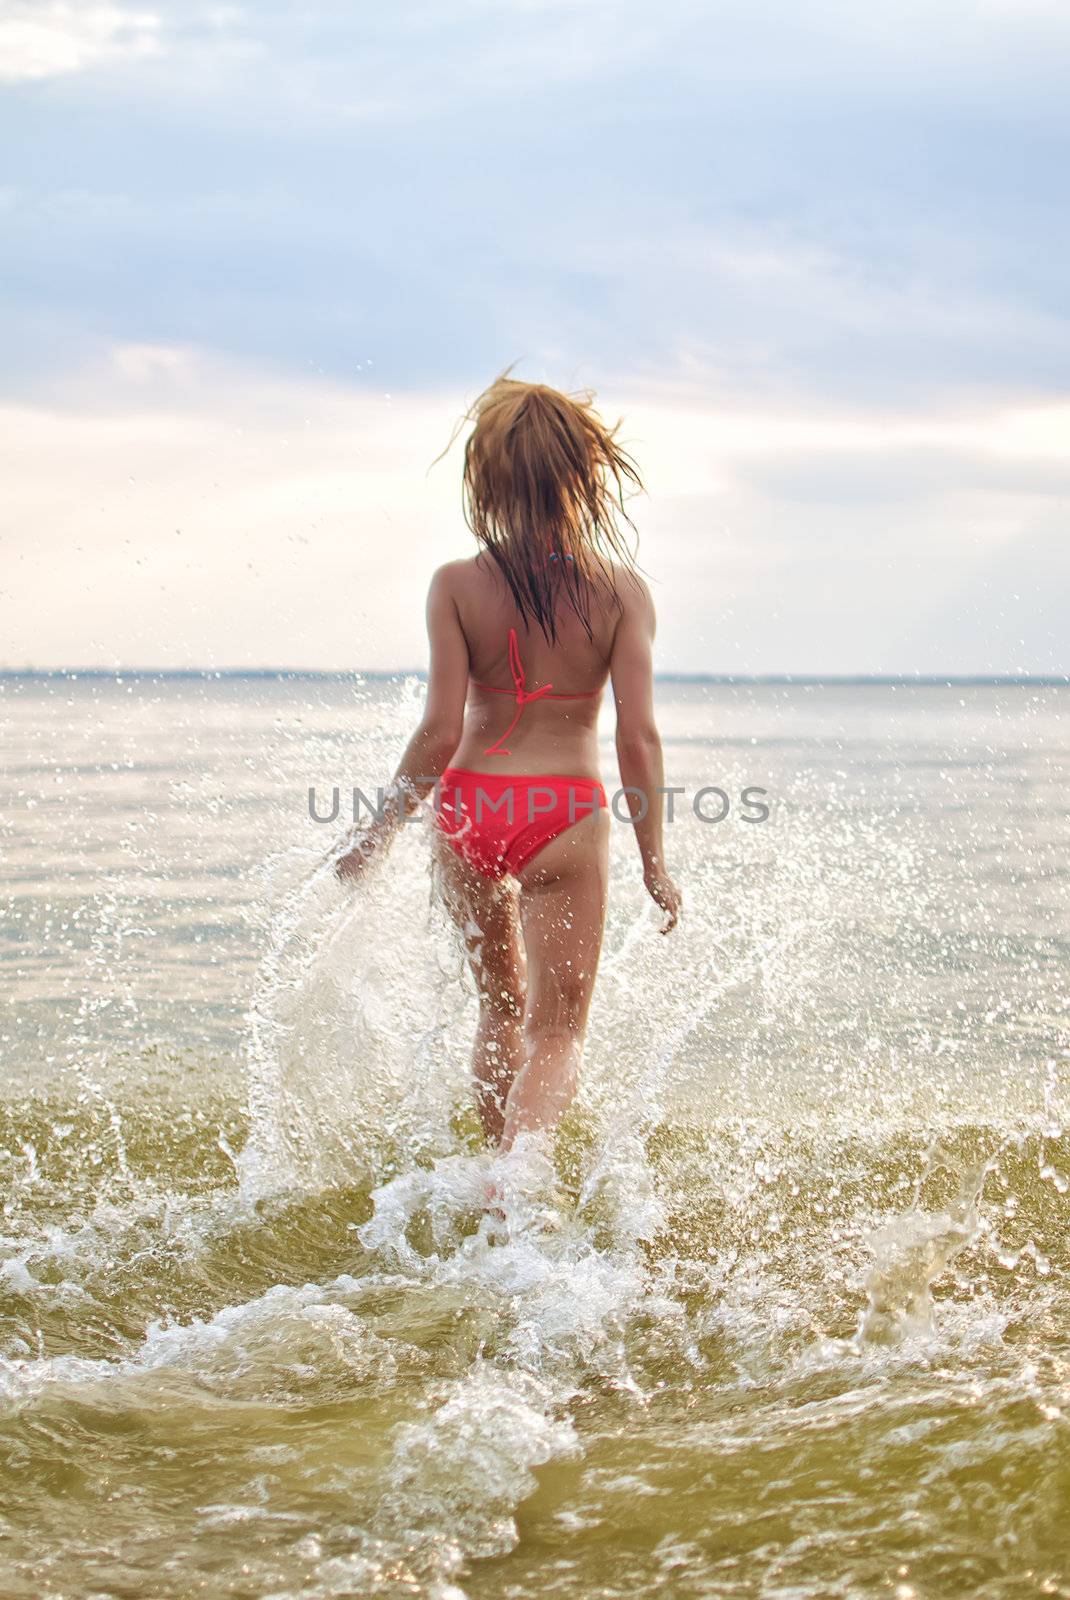 Pretty woman having fun in the sea by dmitrimaruta